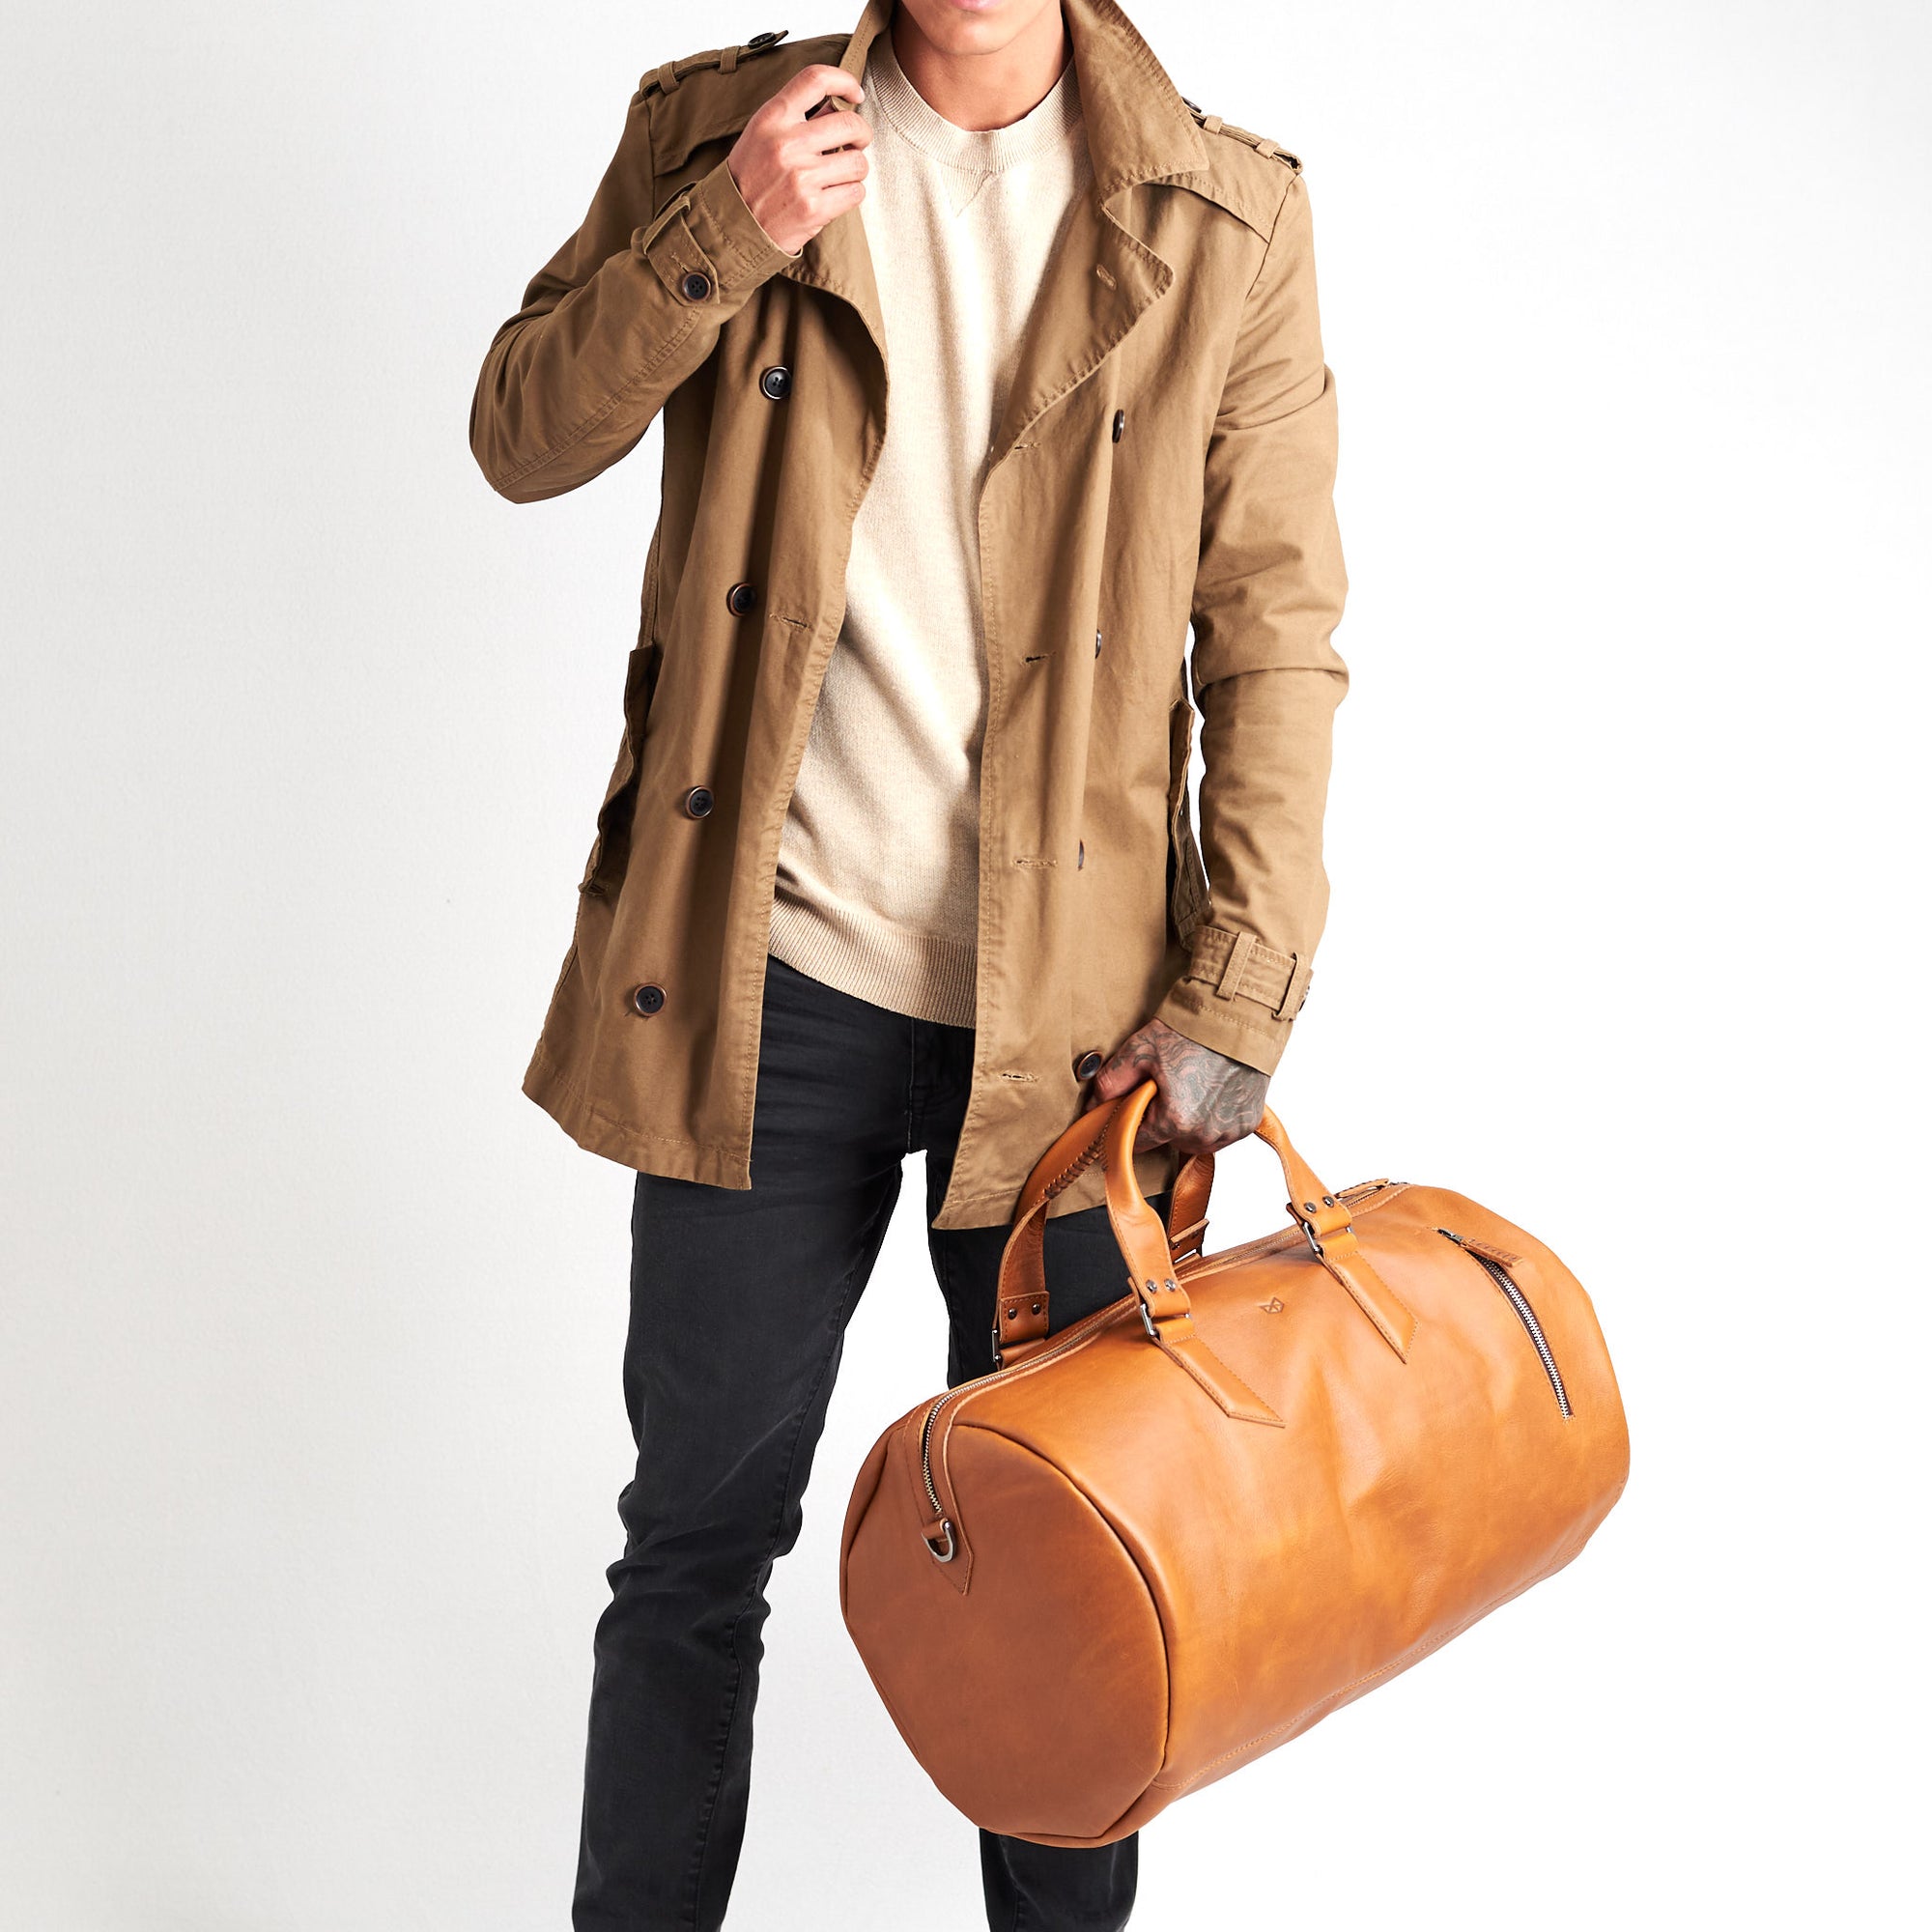 Styl. Handmade Tan brown leather duffle bag for men. Mens designer shoulder bag